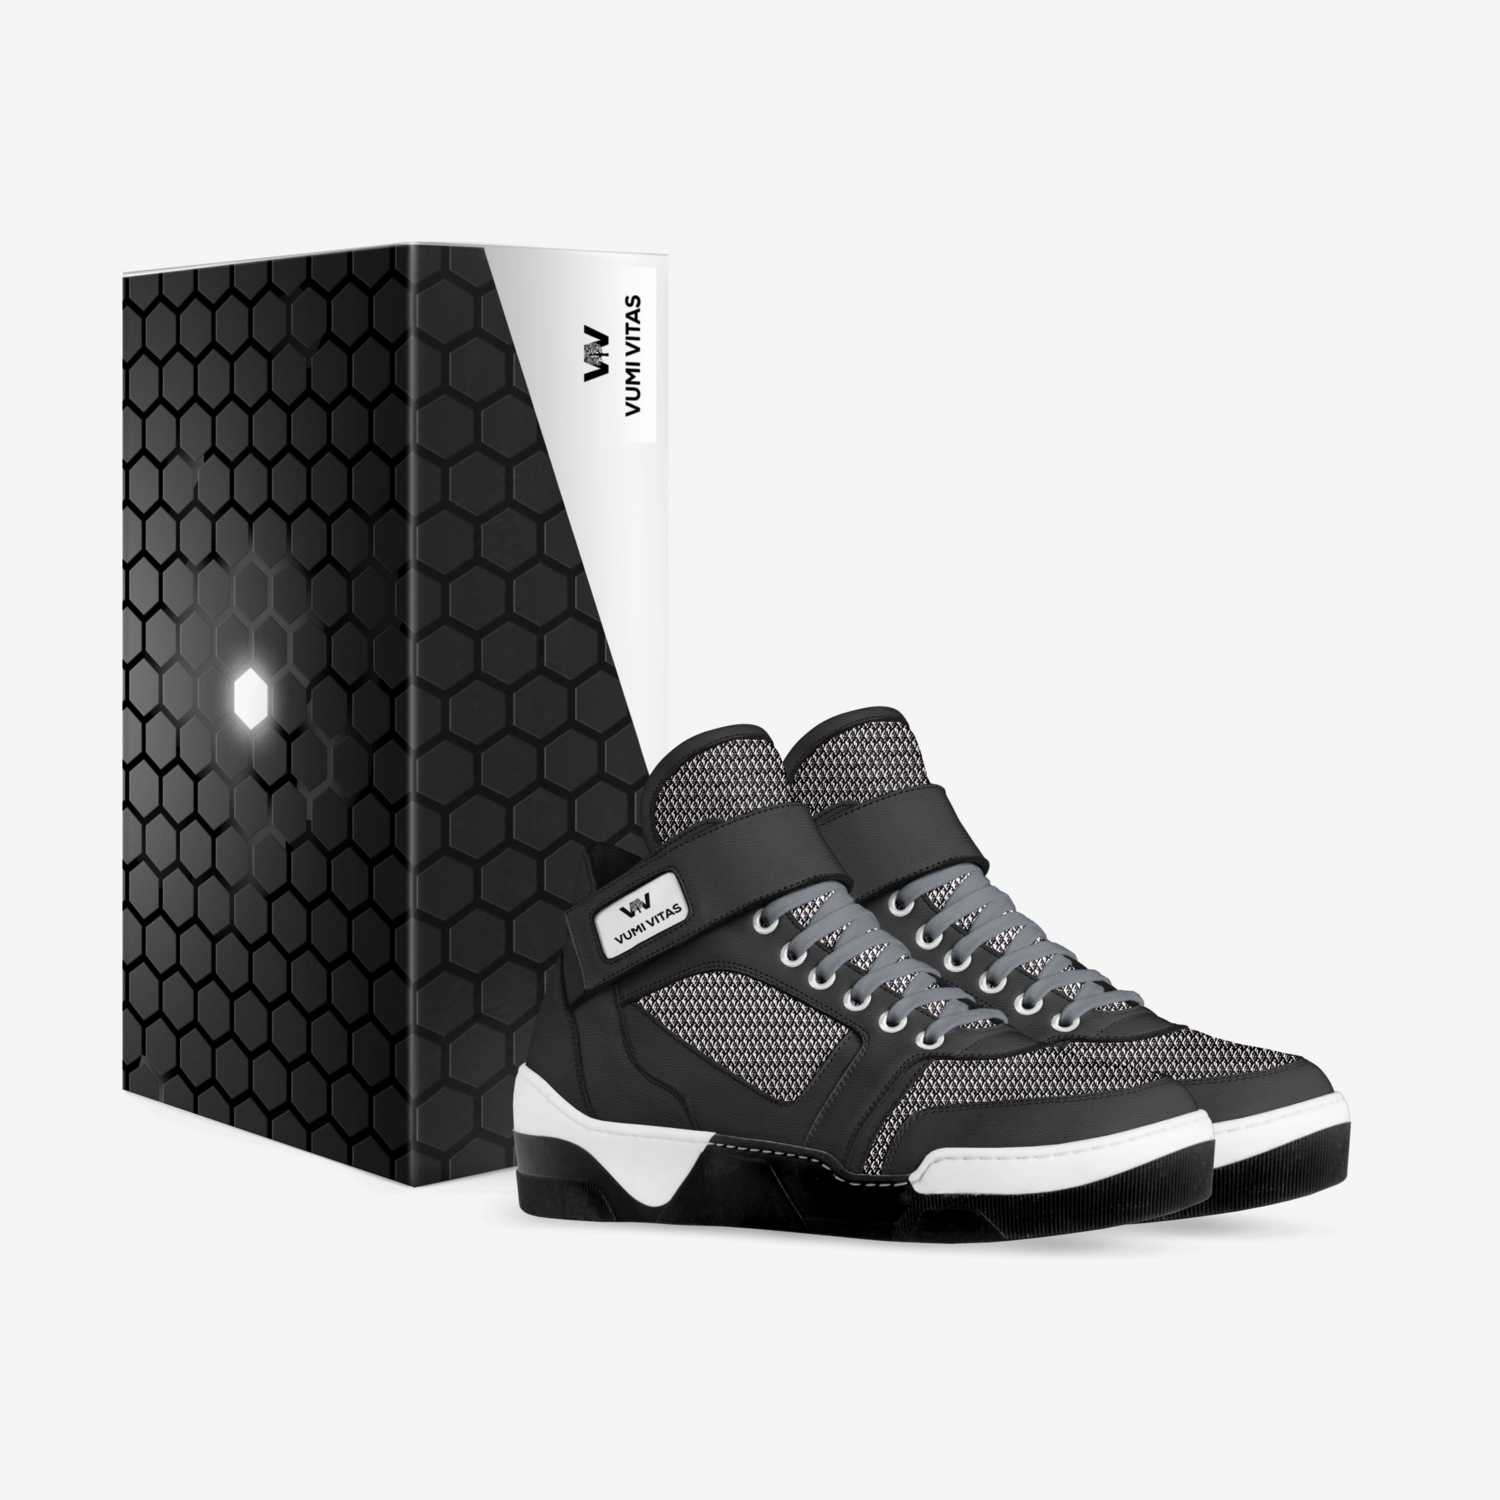 Vumi Vitas custom made in Italy shoes by Tony Mcdowell | Box view